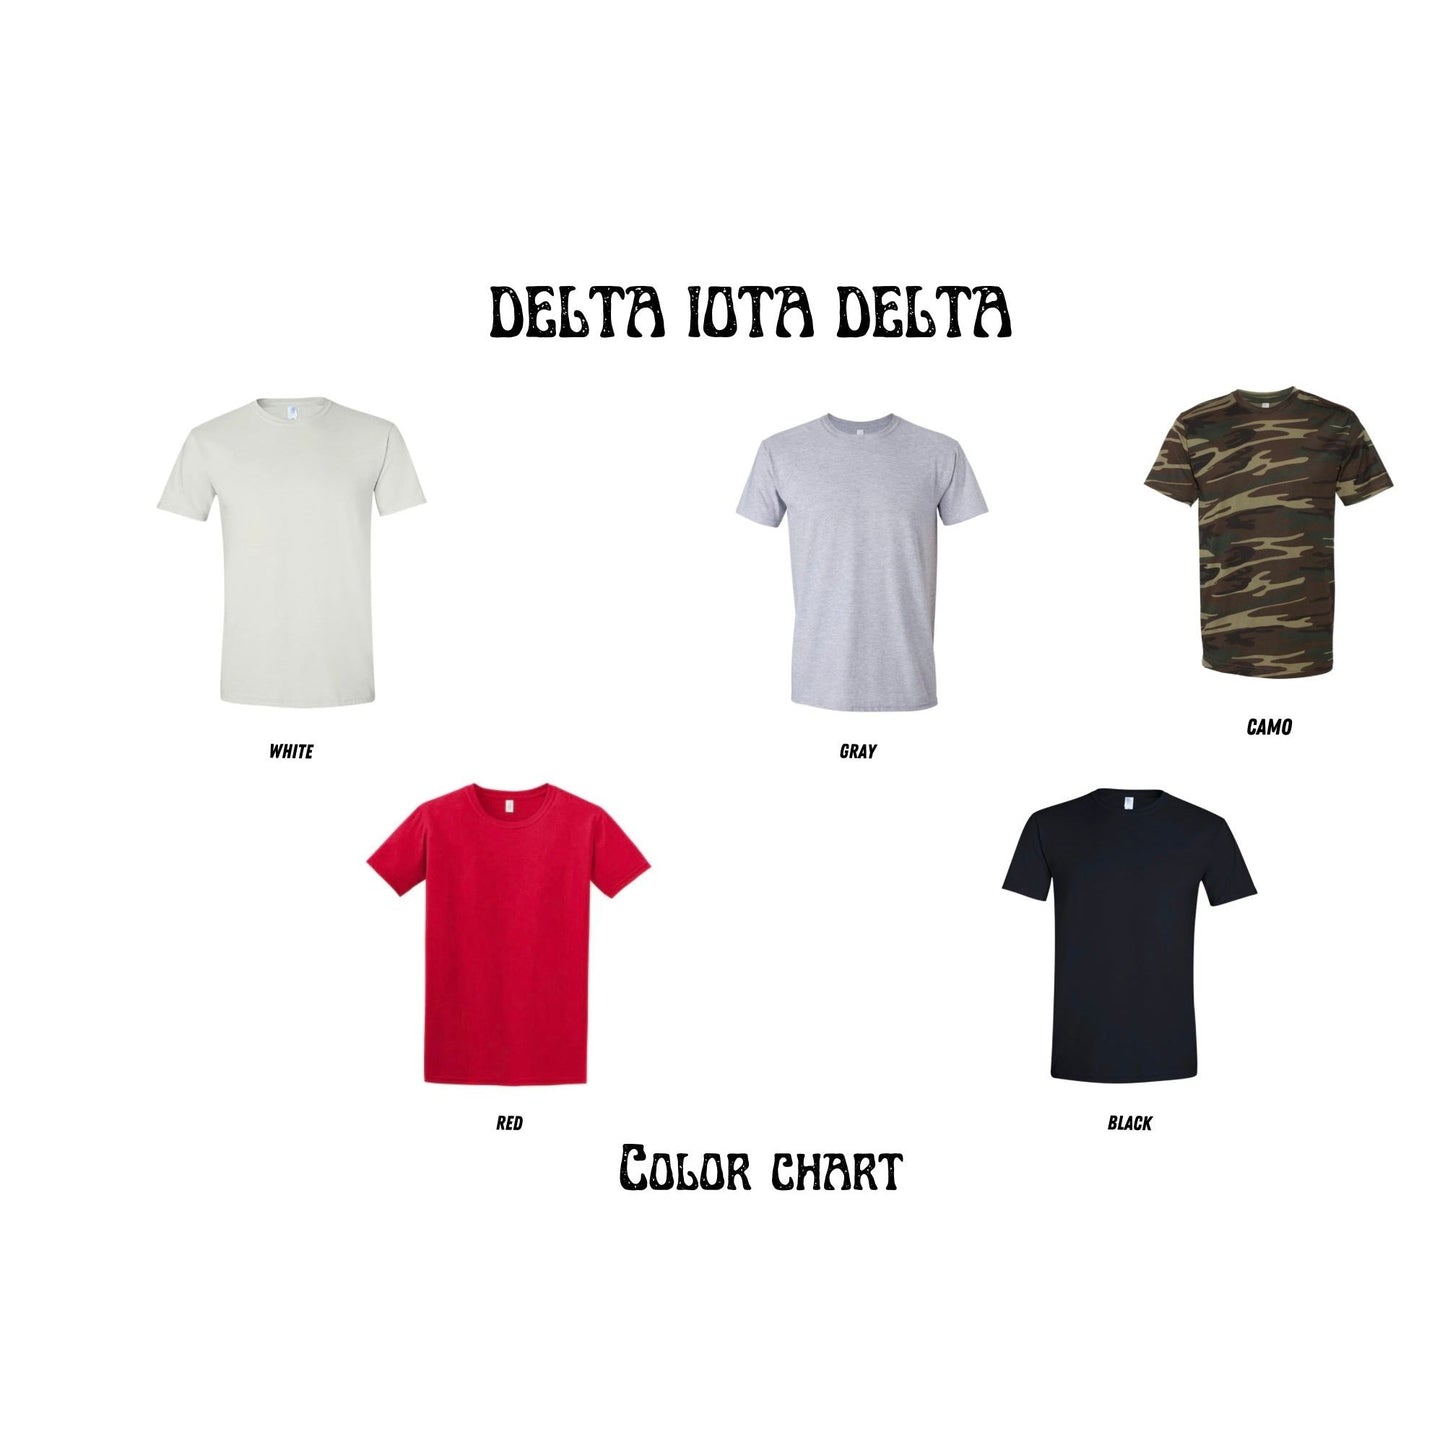 Rhinestone Delta Iota Delta T-shirt